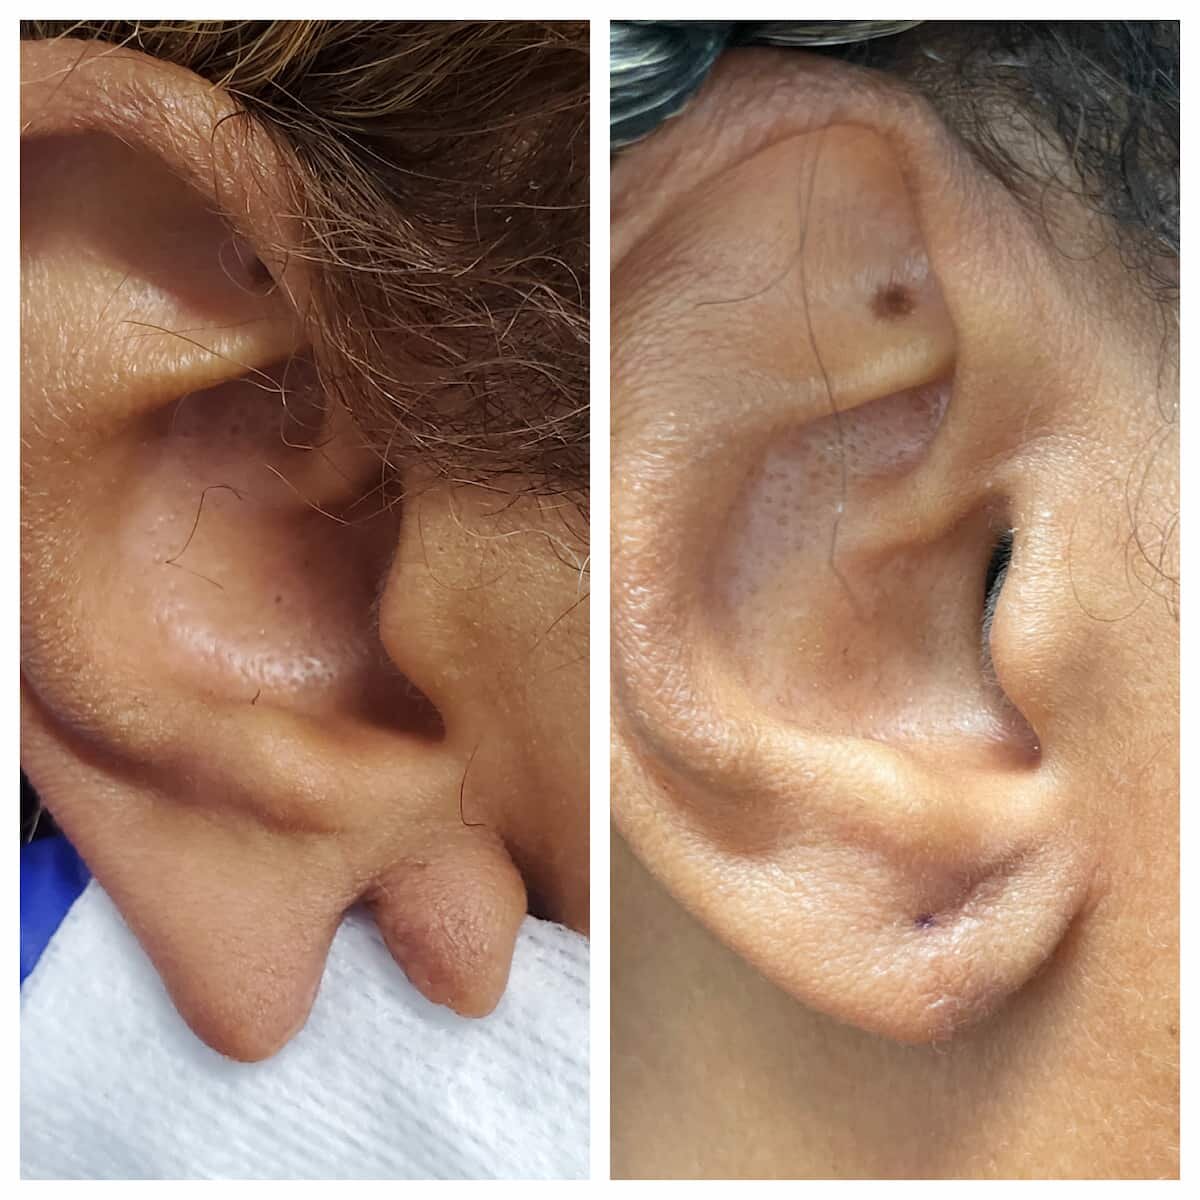 Hole repair on Bab ear : r/buildabear